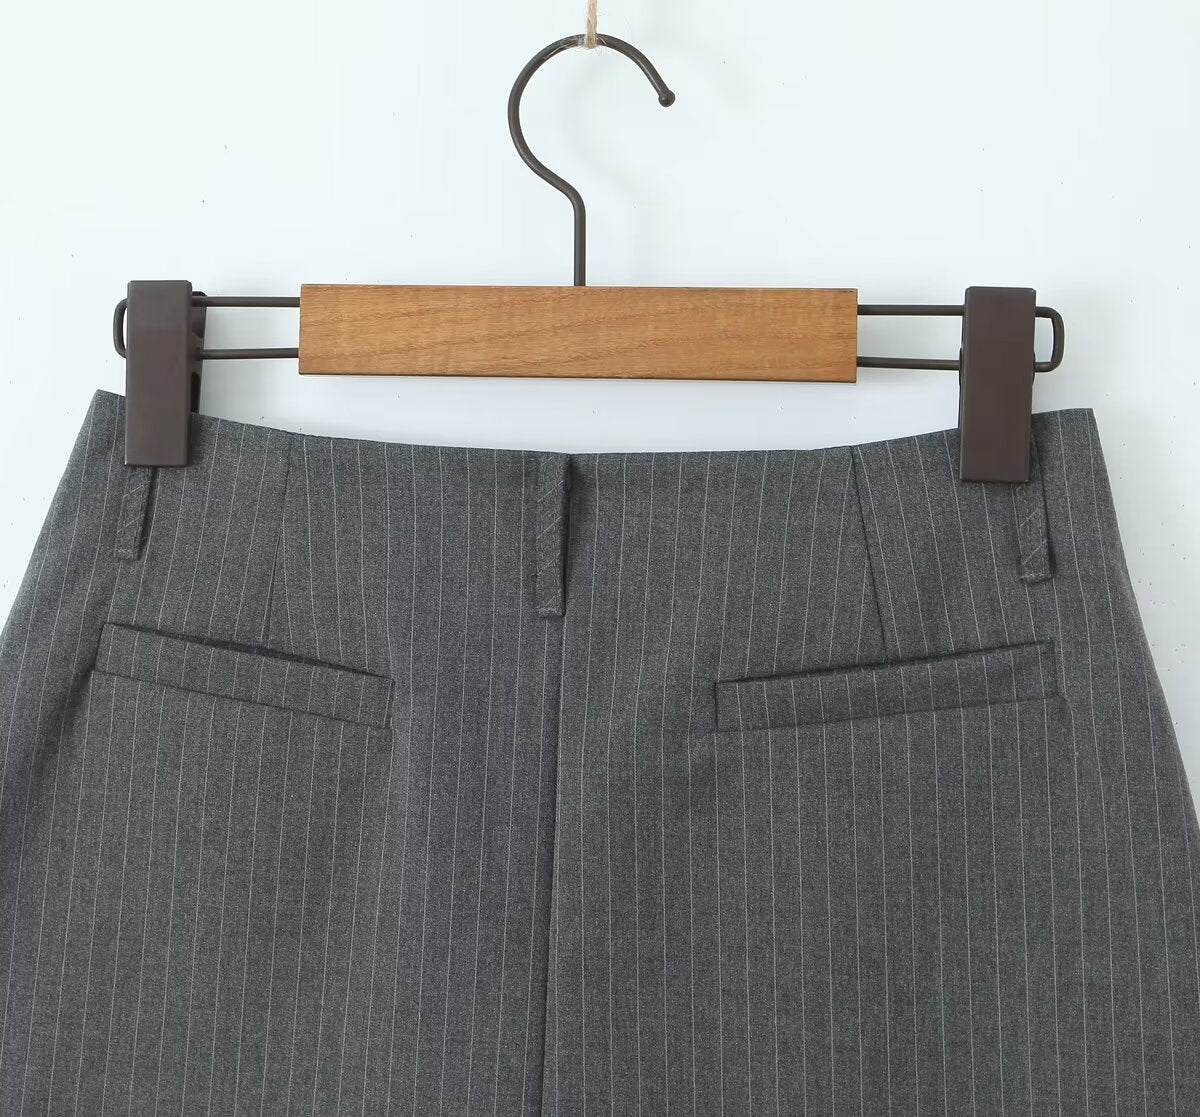 Retro Low-Waist Vertical Stripes Mini Sheath A-Line Skirt for Women